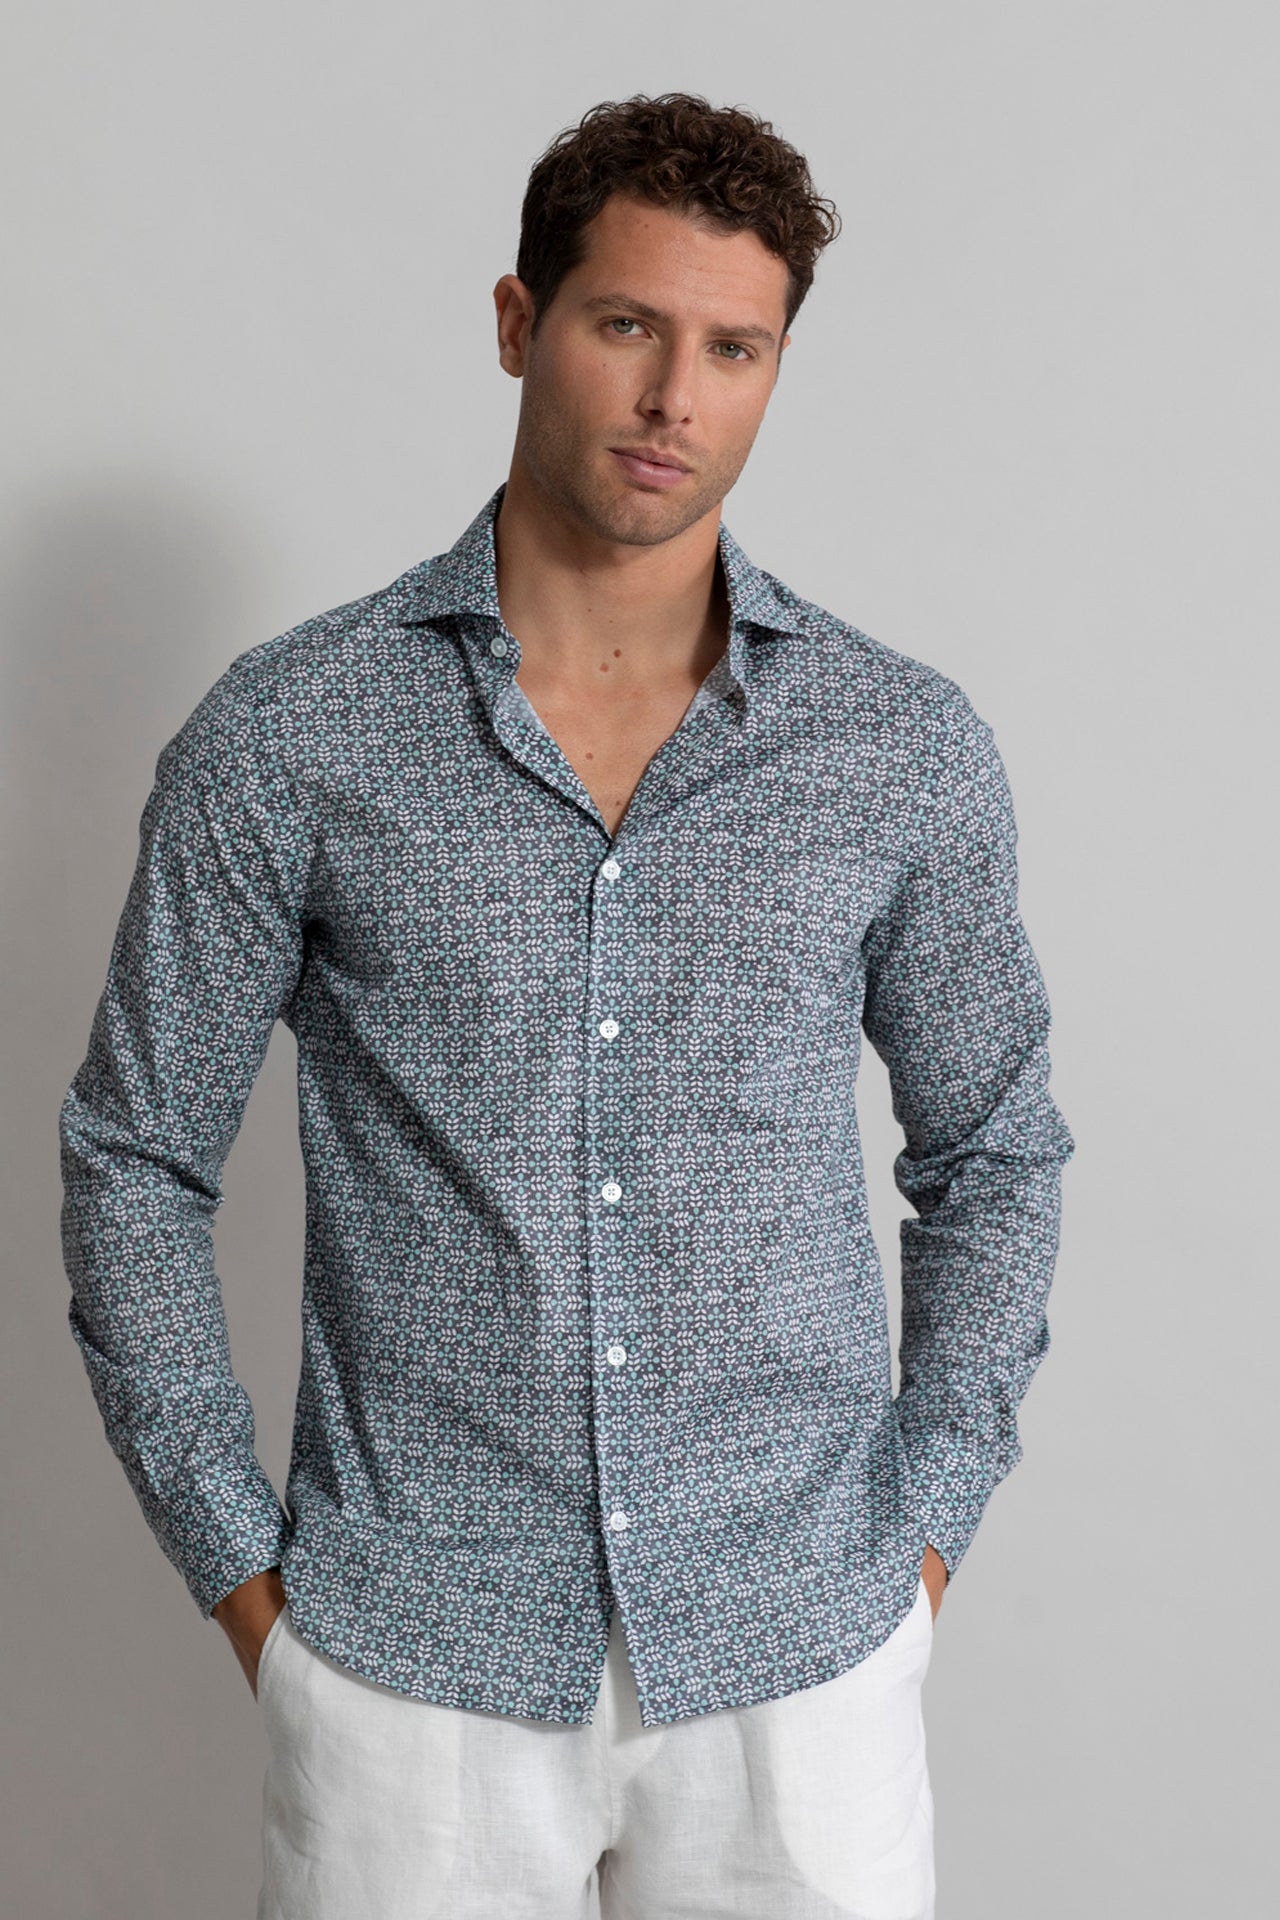 Sean printed cotton voile shirt - naj pattern